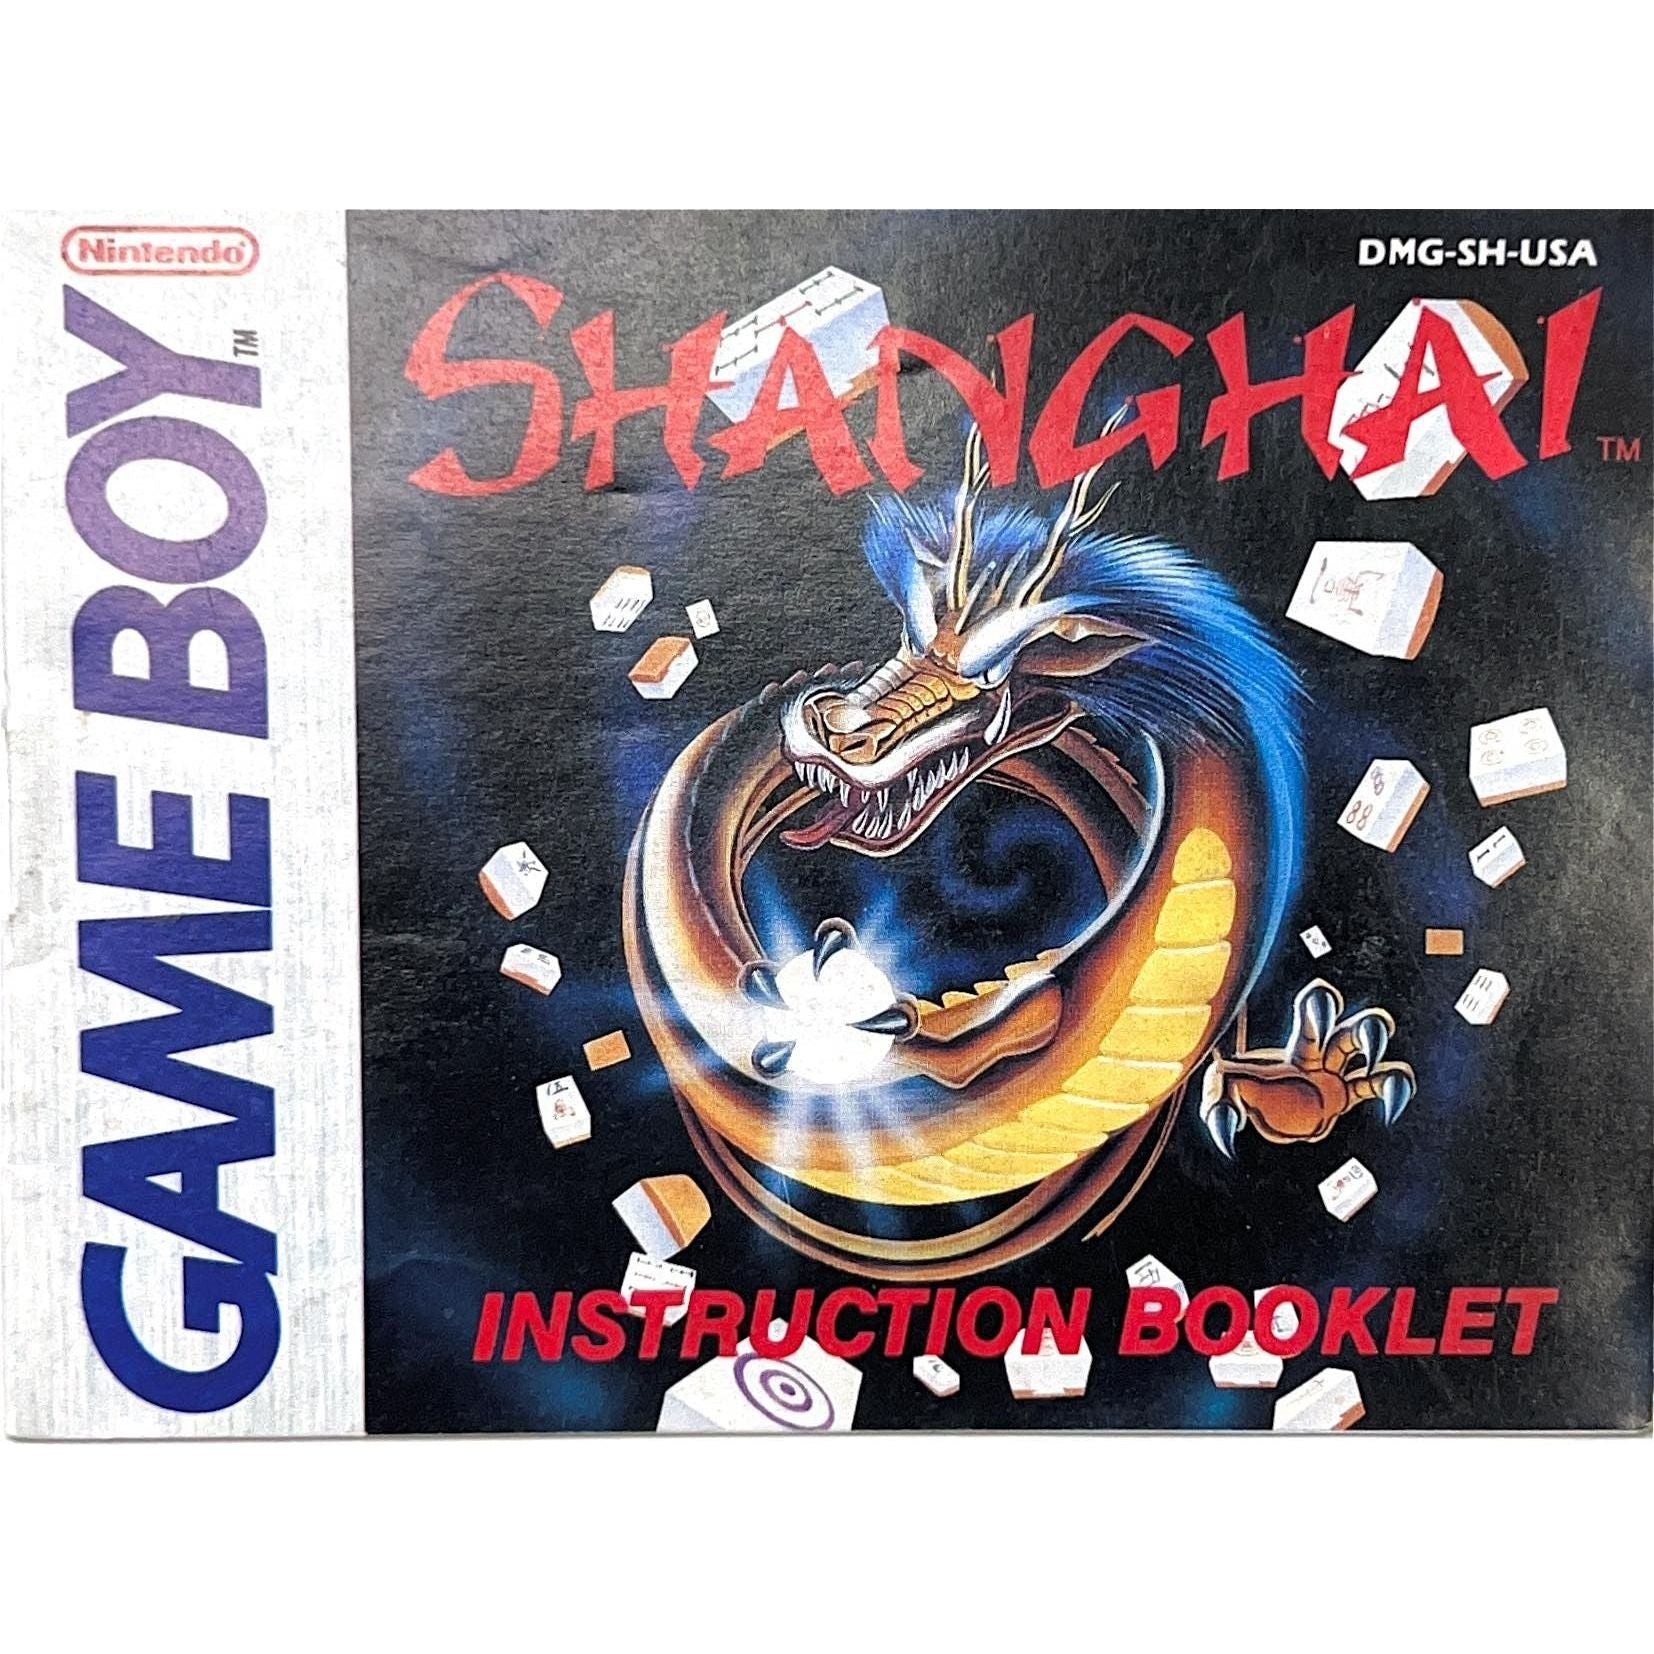 GB - Shanghai (Manual)